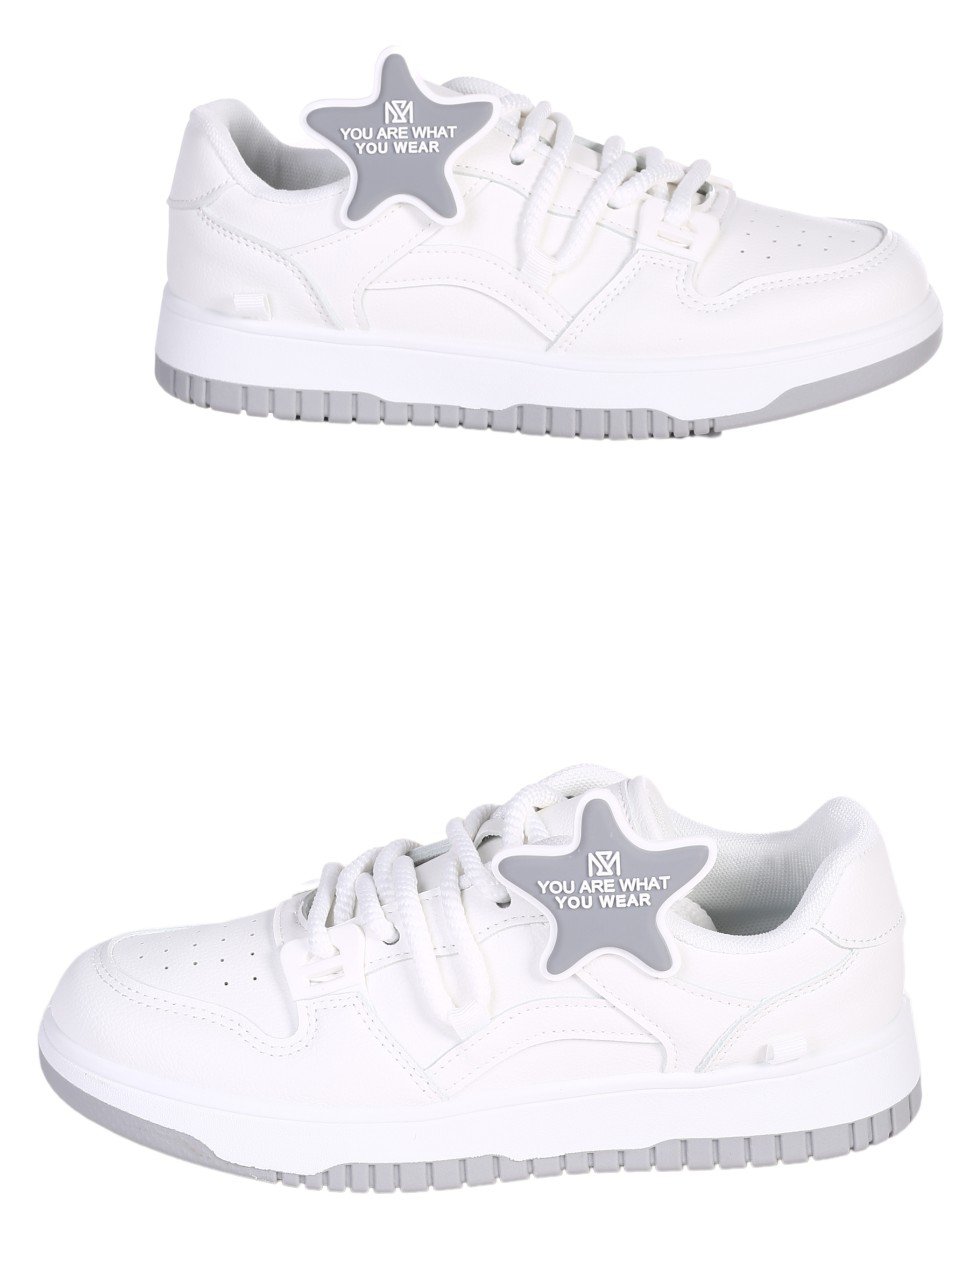 Eжедневни дамски обувки в бяло 3U-24003 white